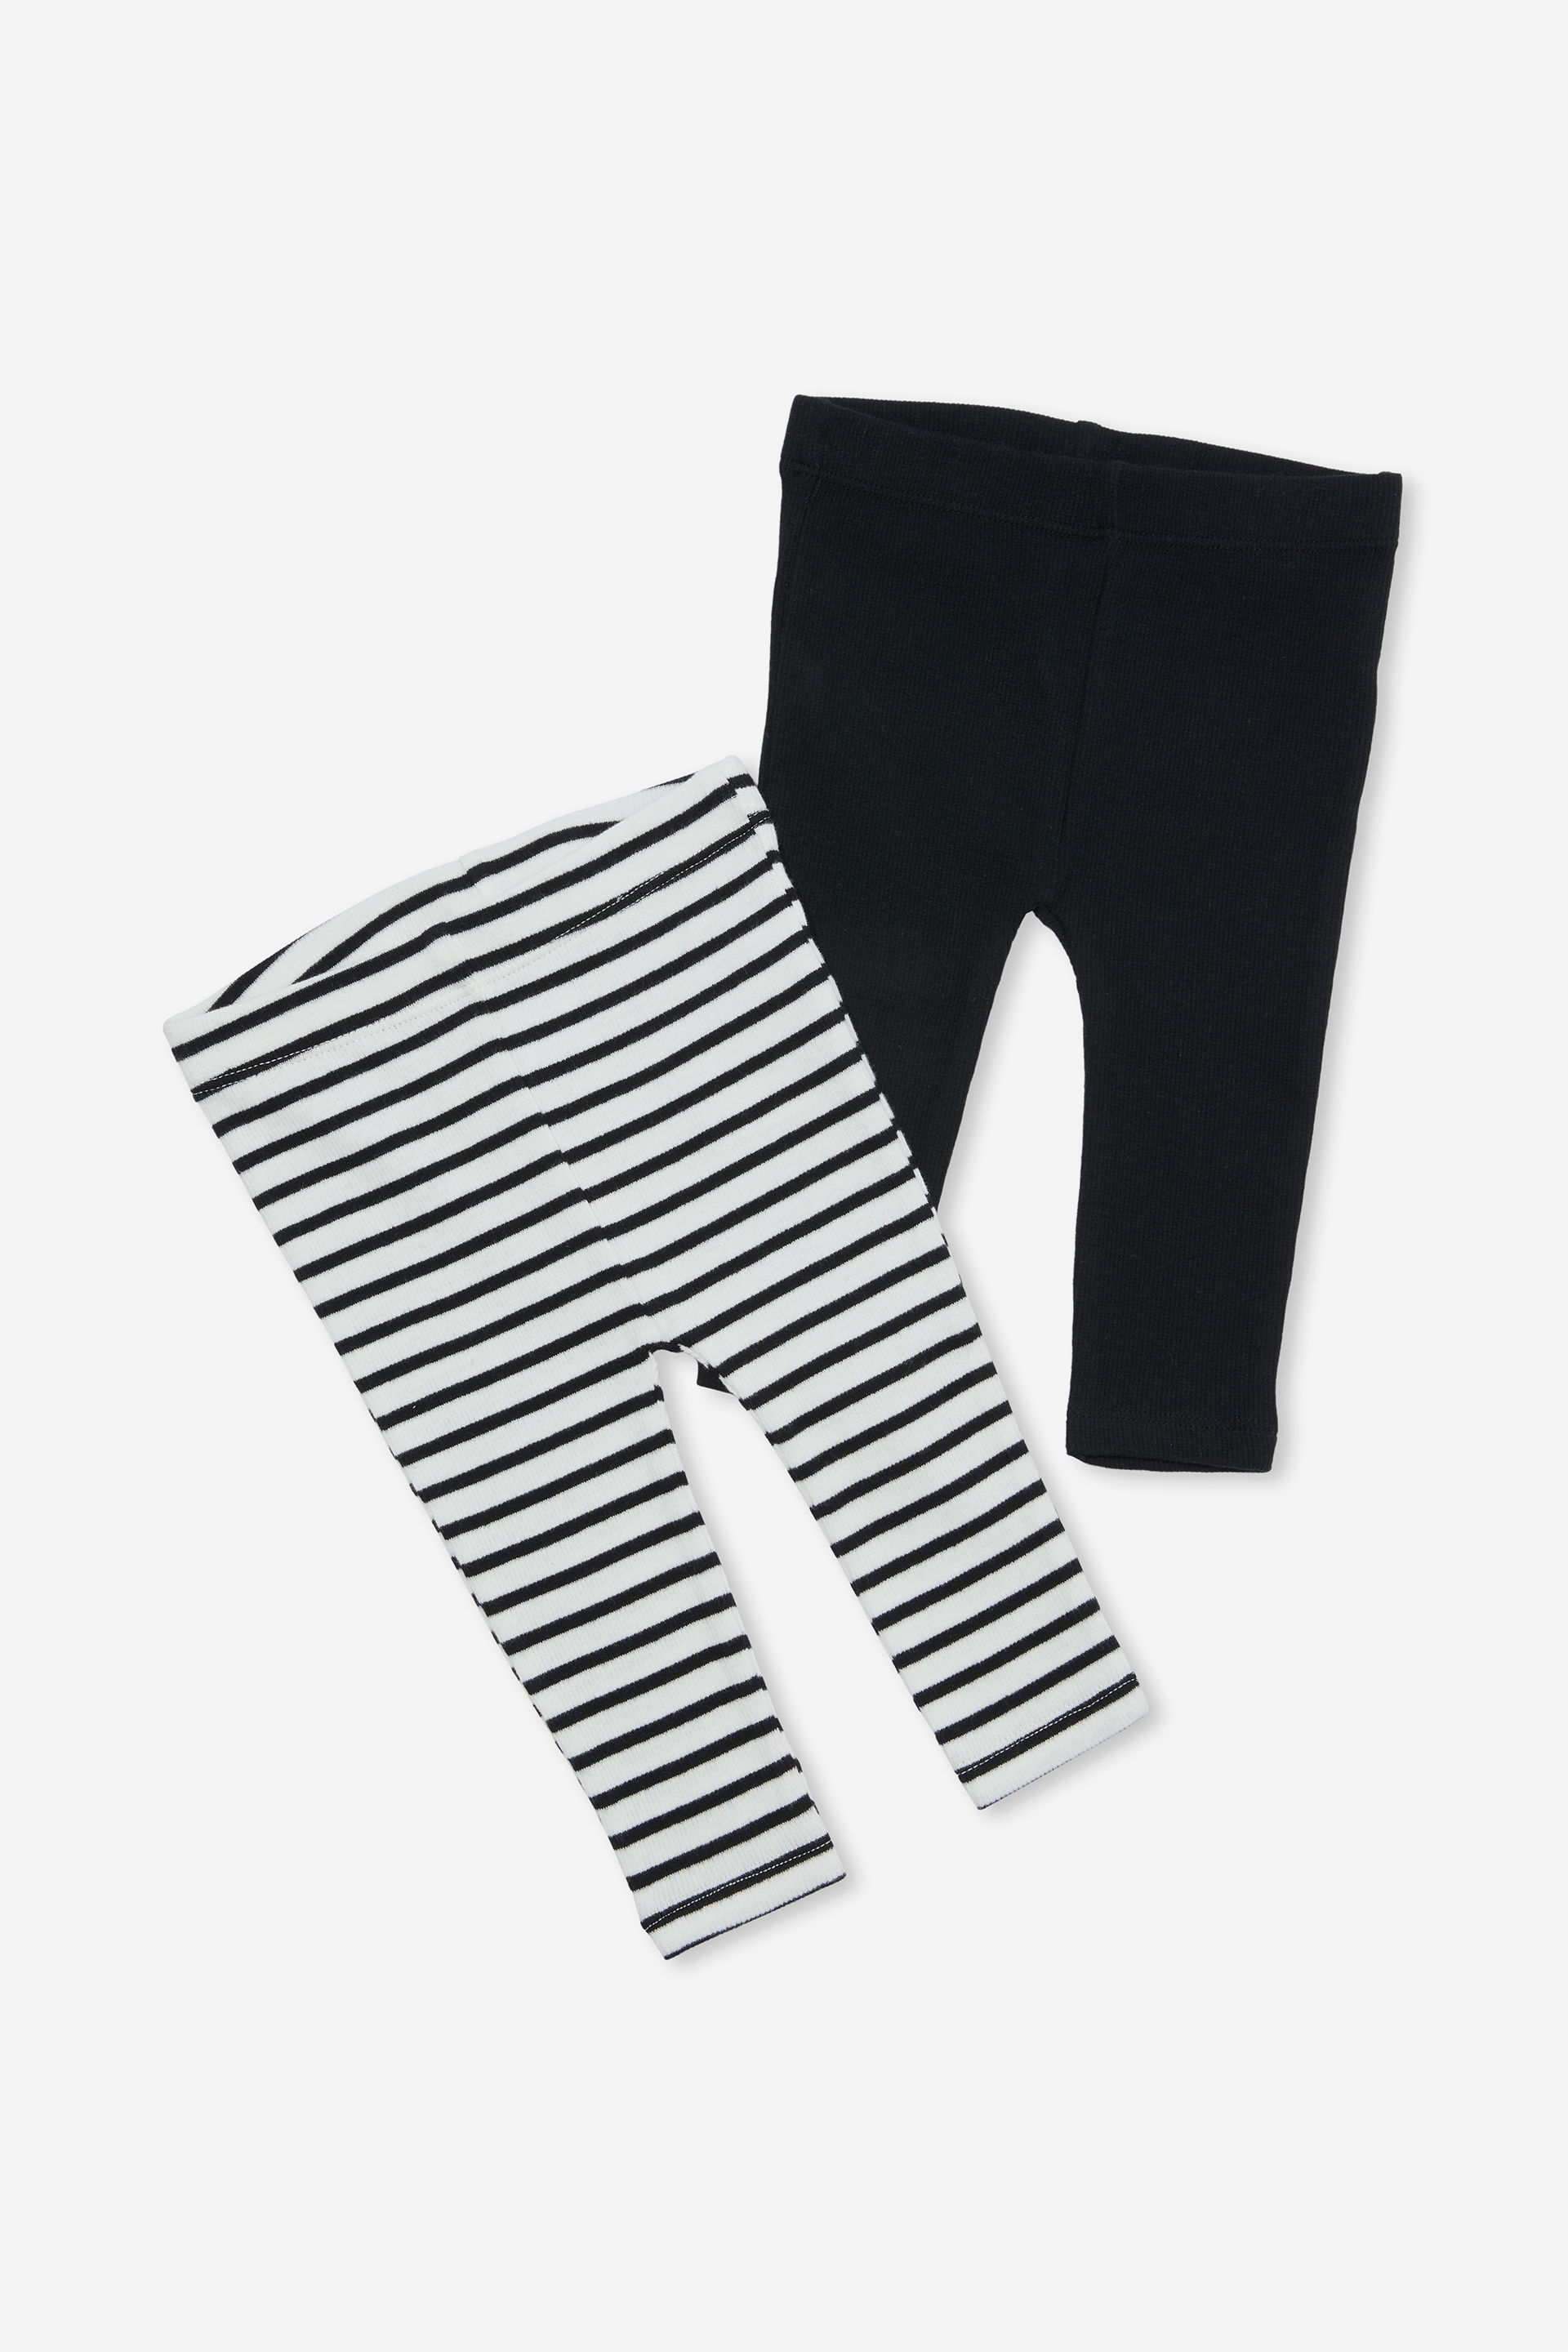 Black and Gray Horizontal Stripes Men's Leggings